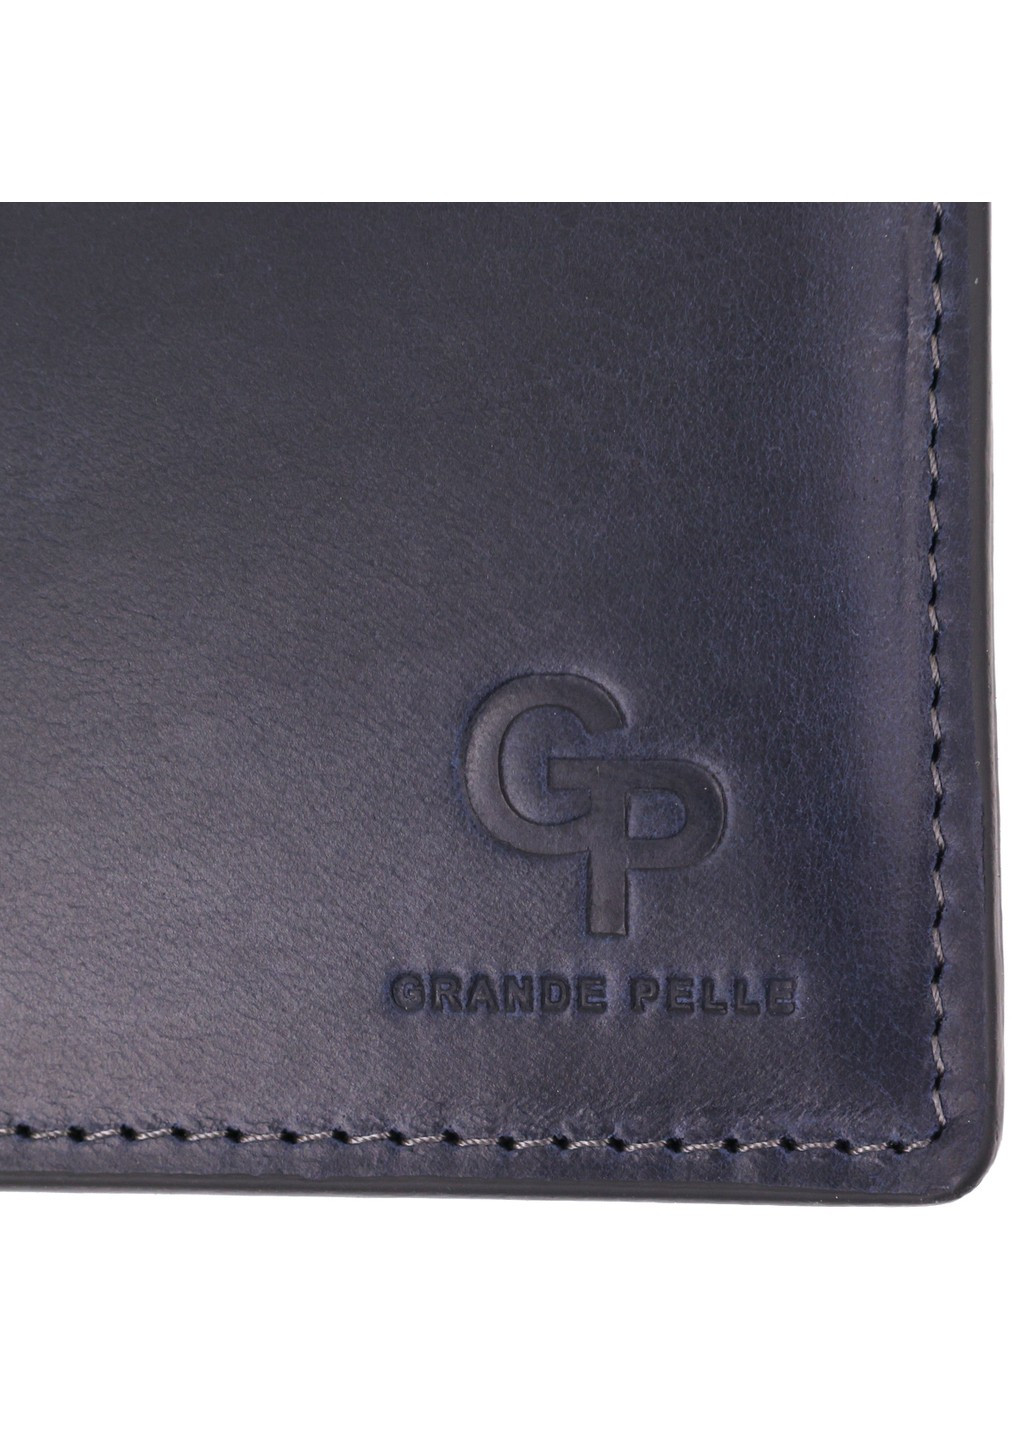 Мужской кошелек Grande Pelle (257171452)